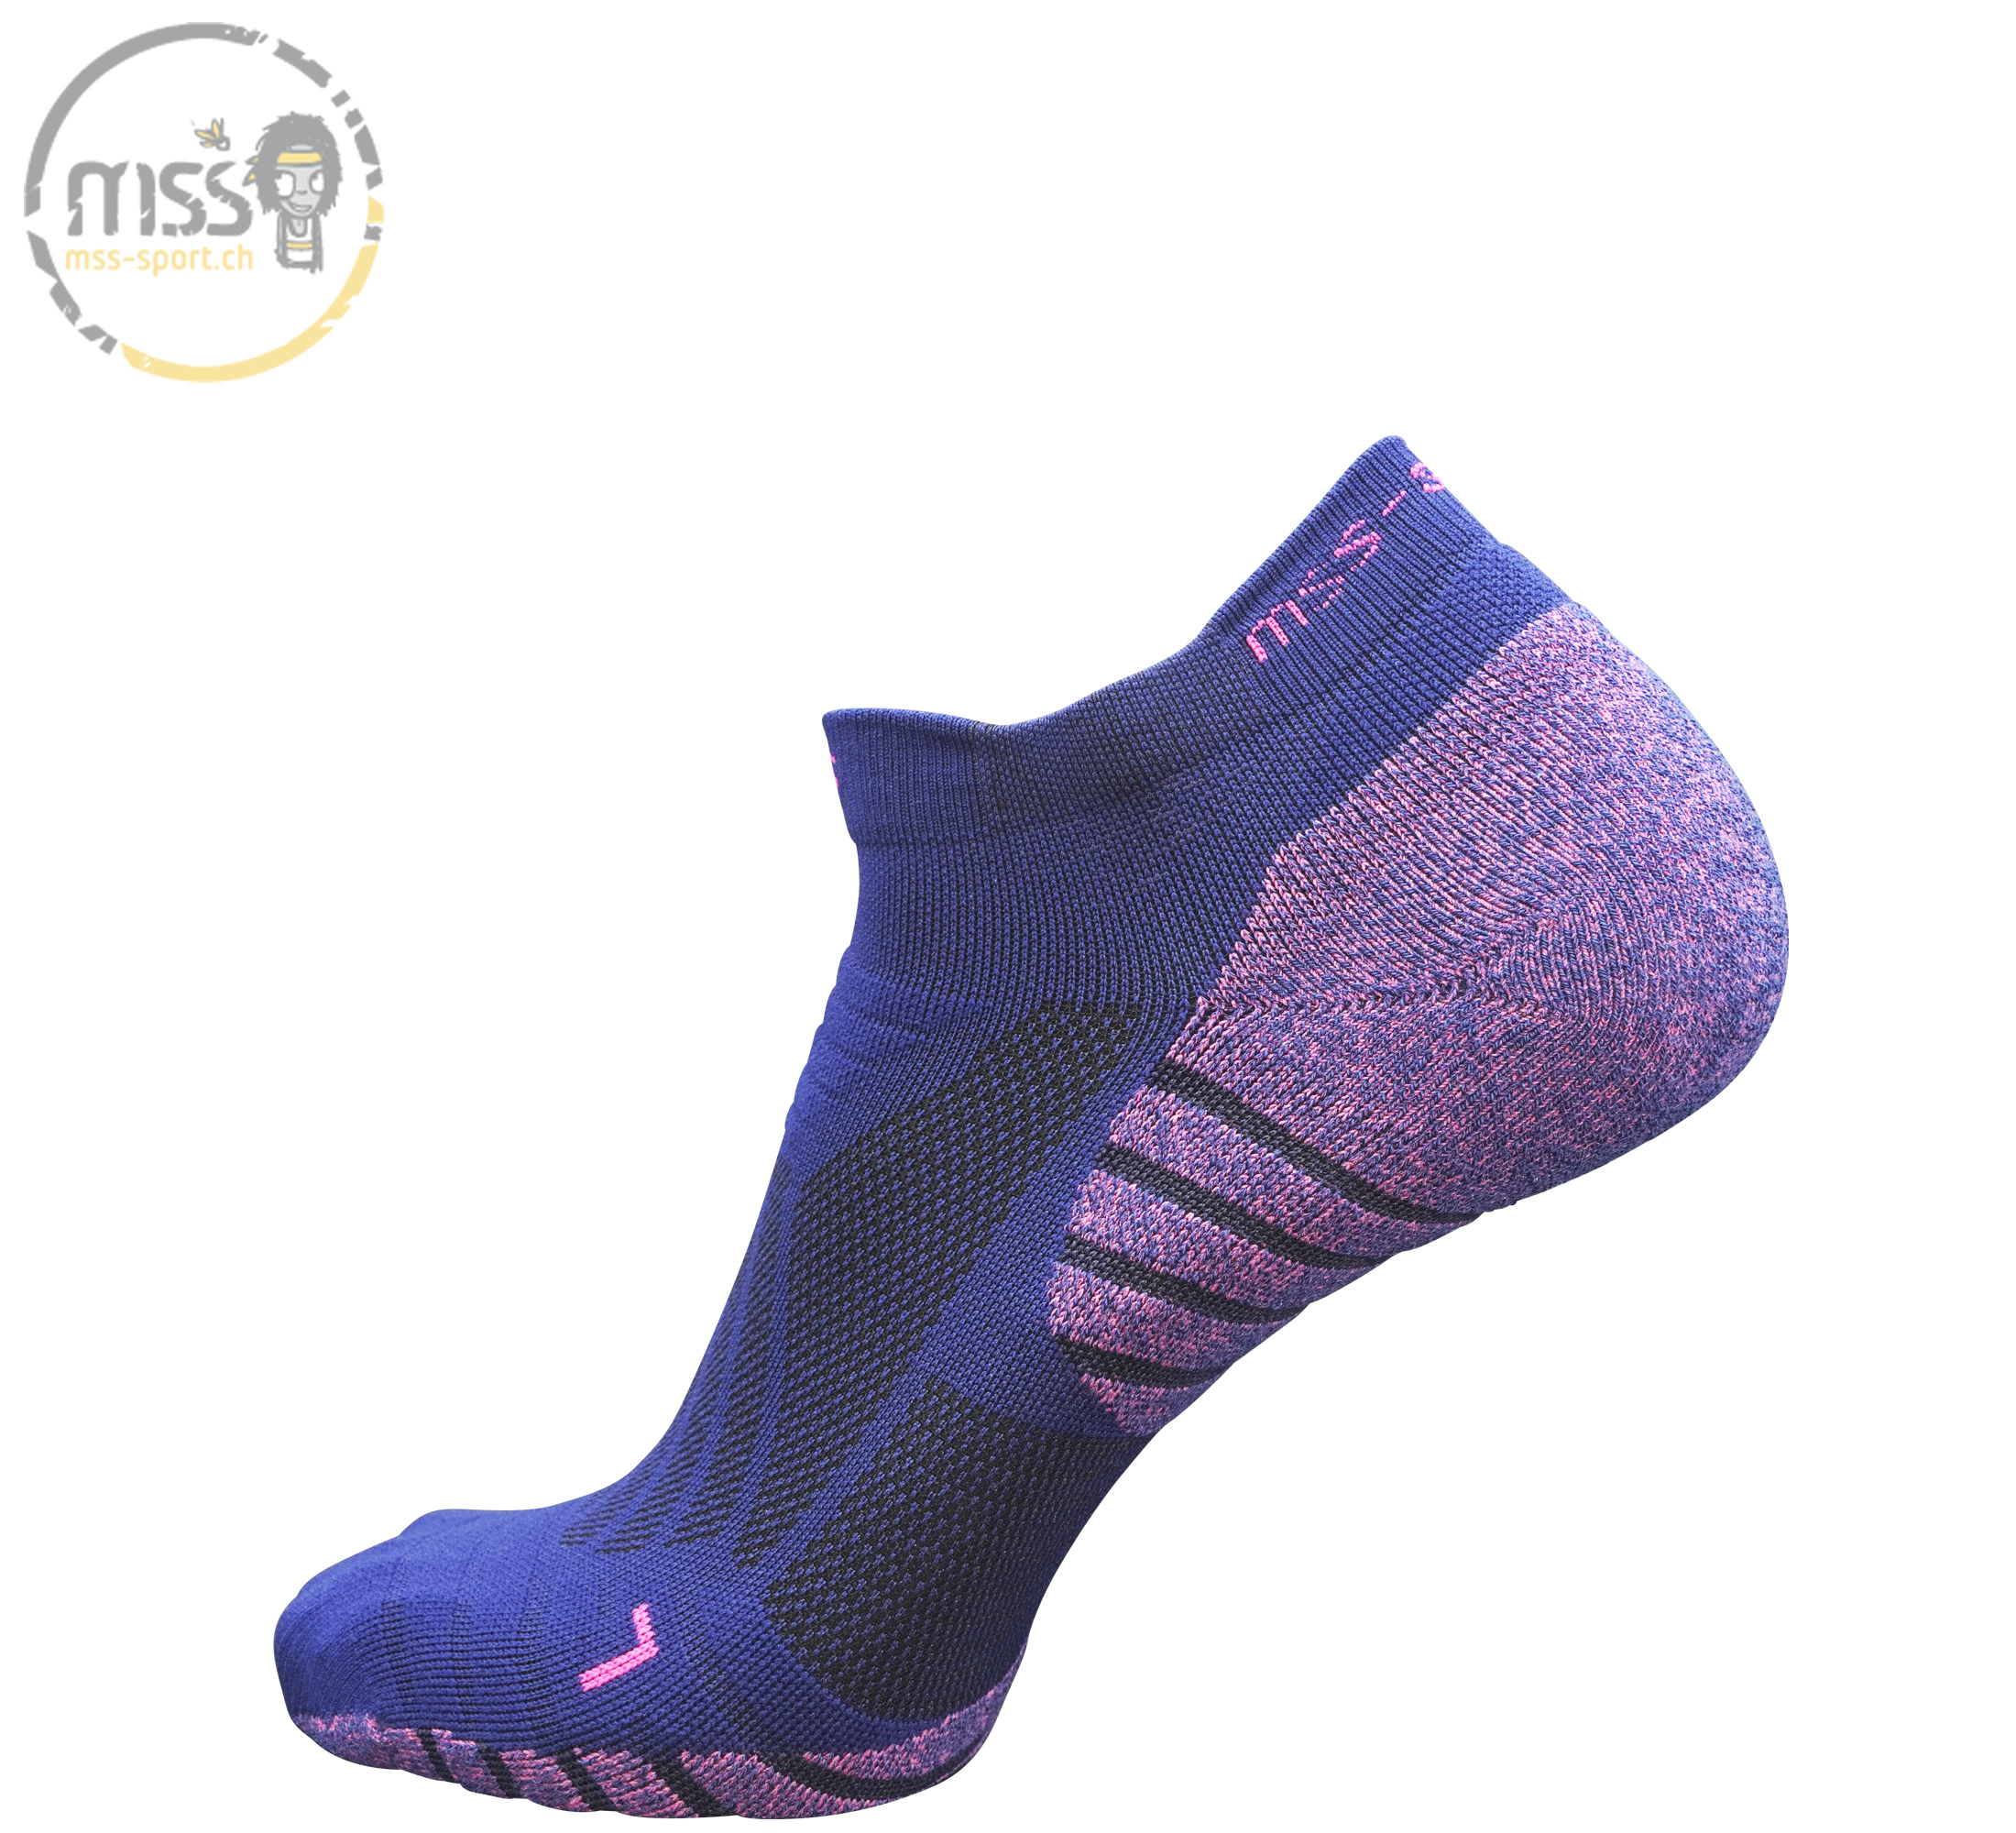 mss-socks GO 7300 low Lady navy pink